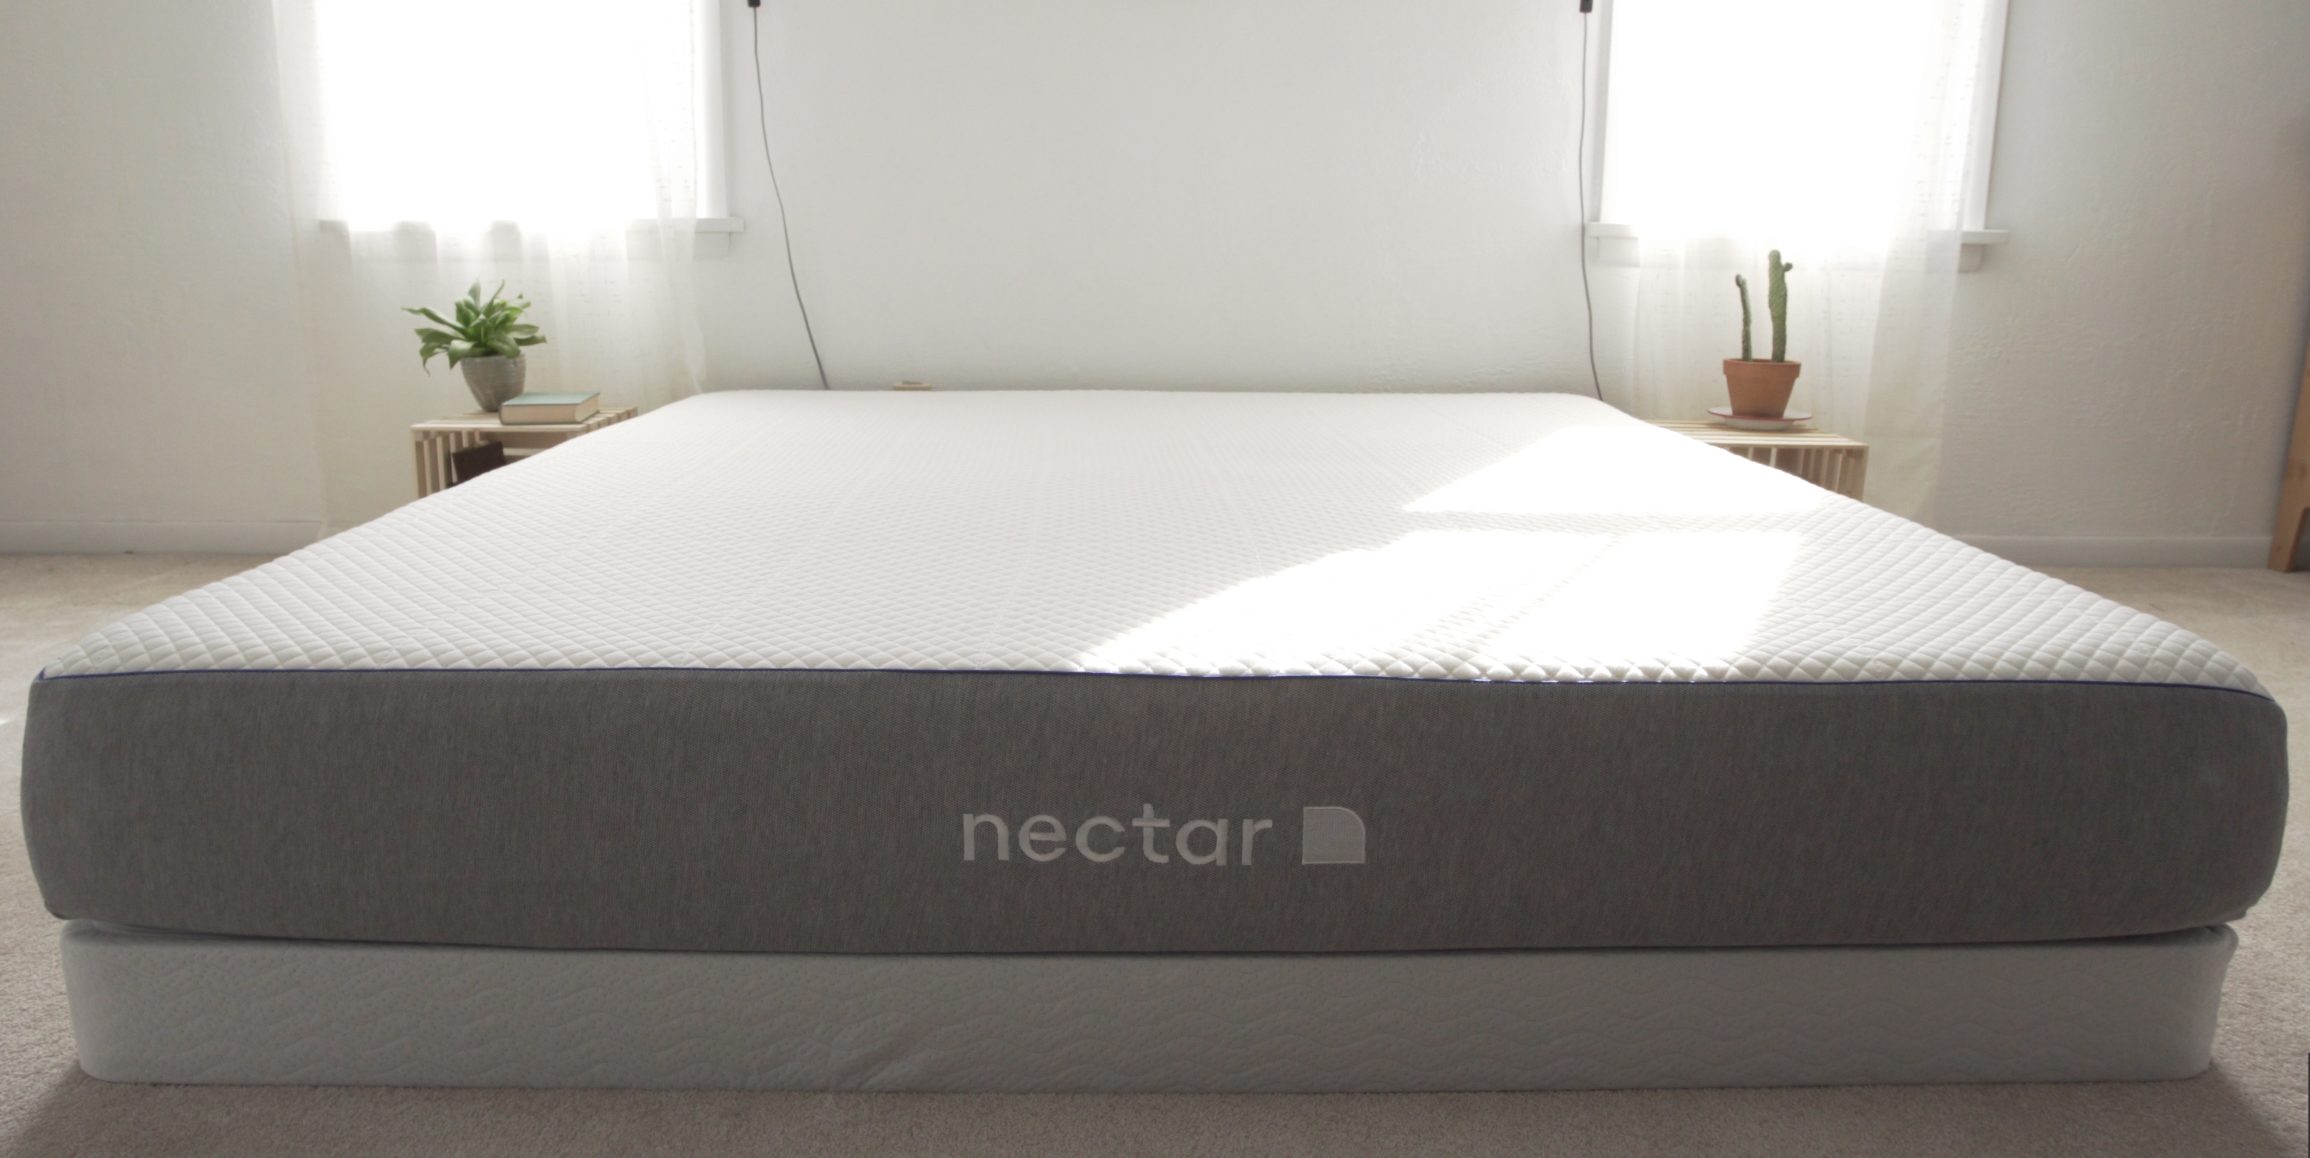 does nectar mattress need a box spring